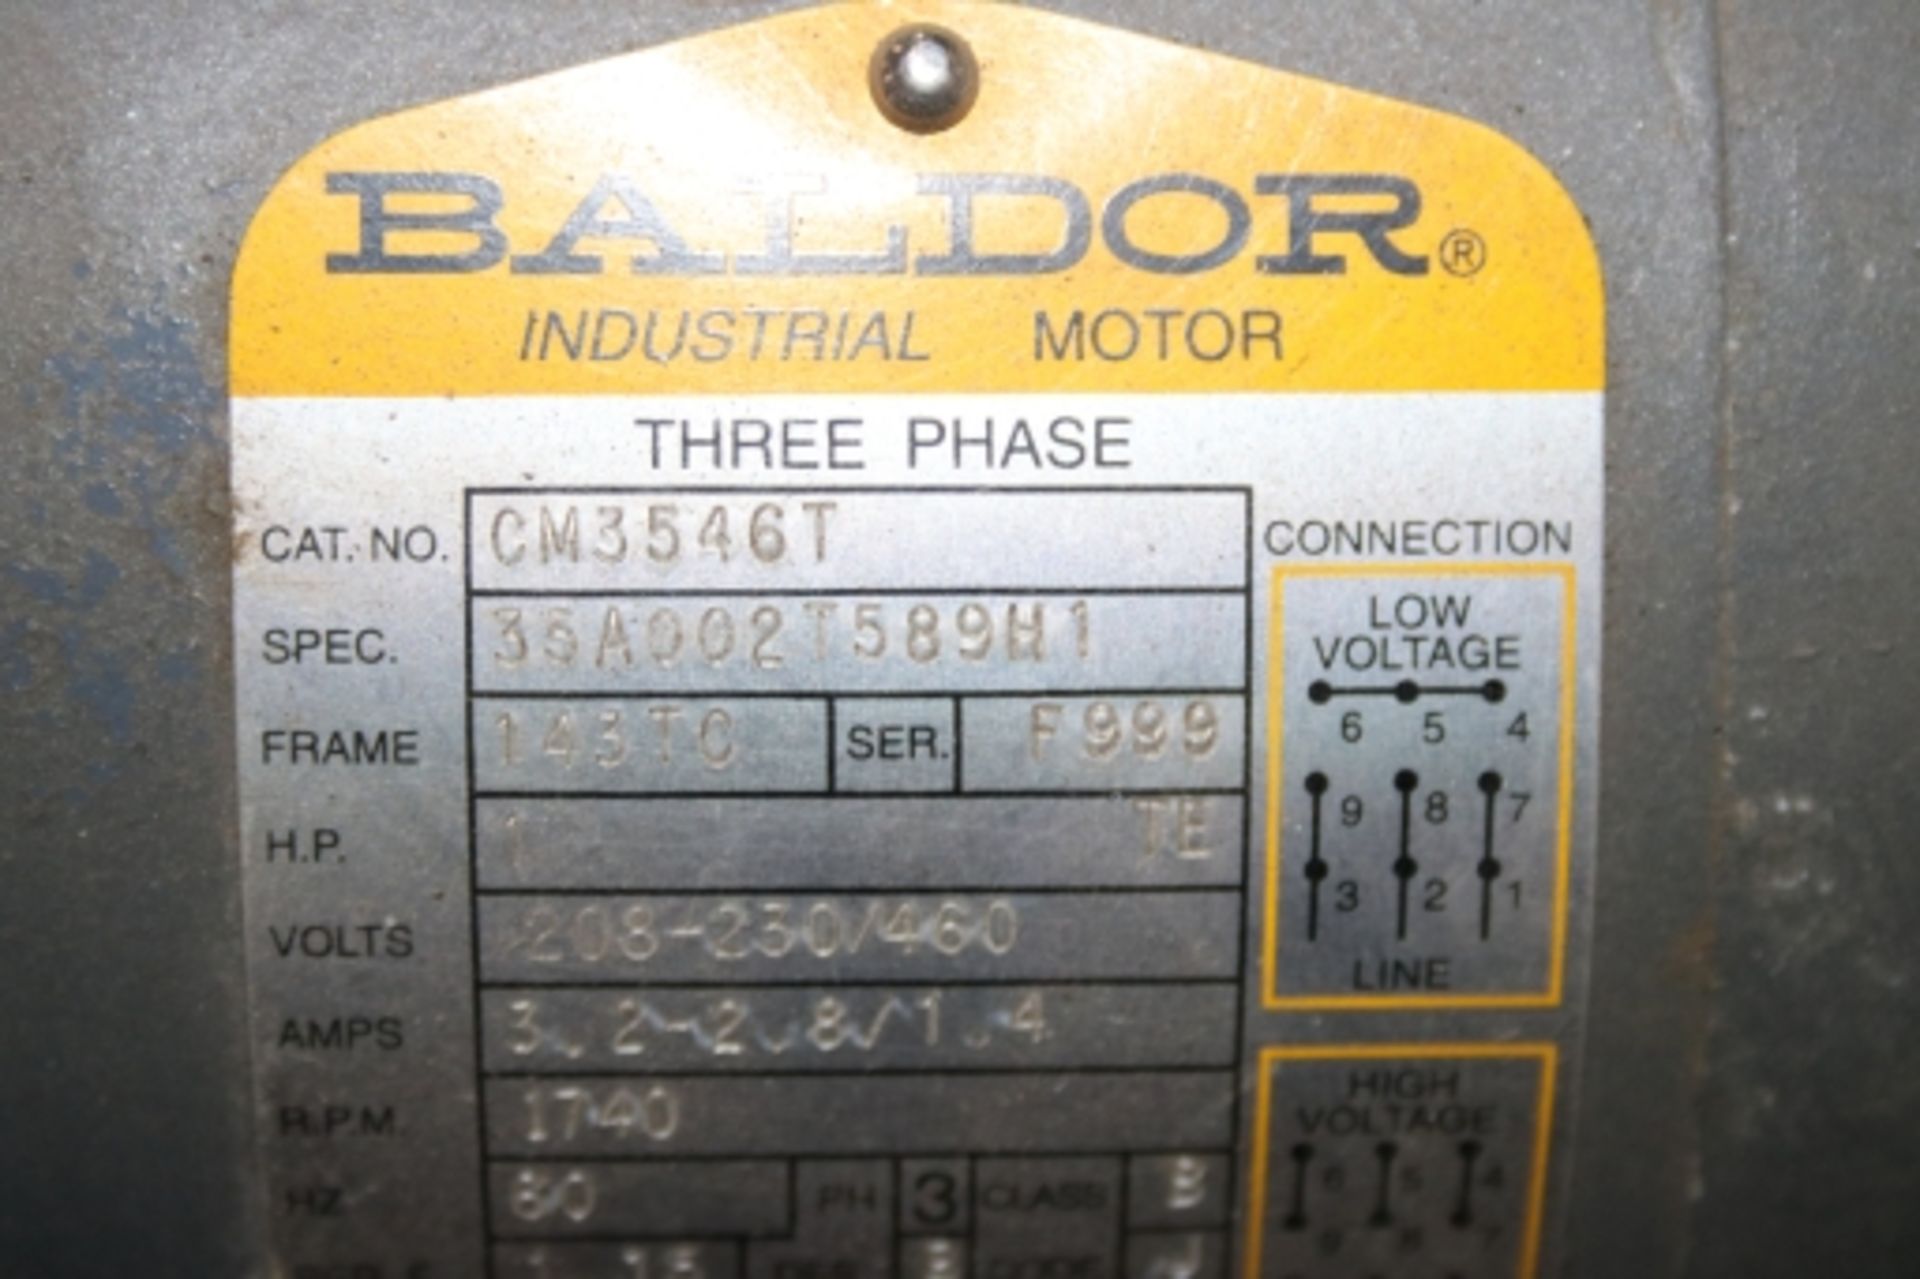 Baldor Industrial Motor, 1 hp/1740 rpm - Image 3 of 8